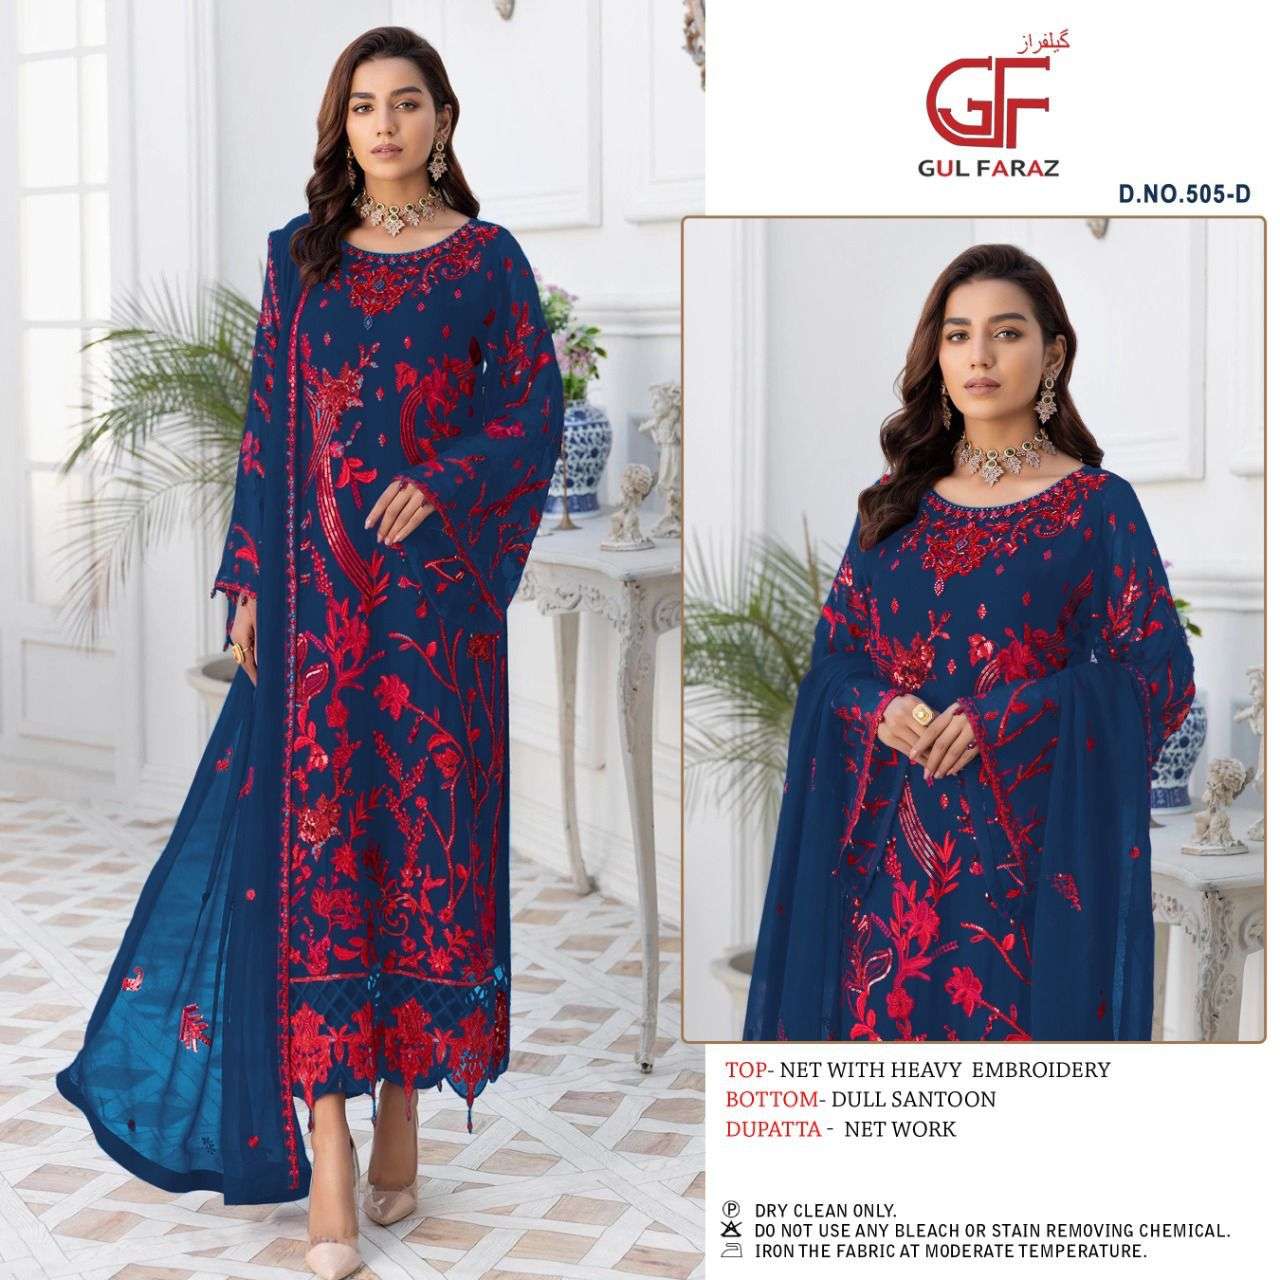 gulfaraz 505 hit pakistani design best price supplier from surat